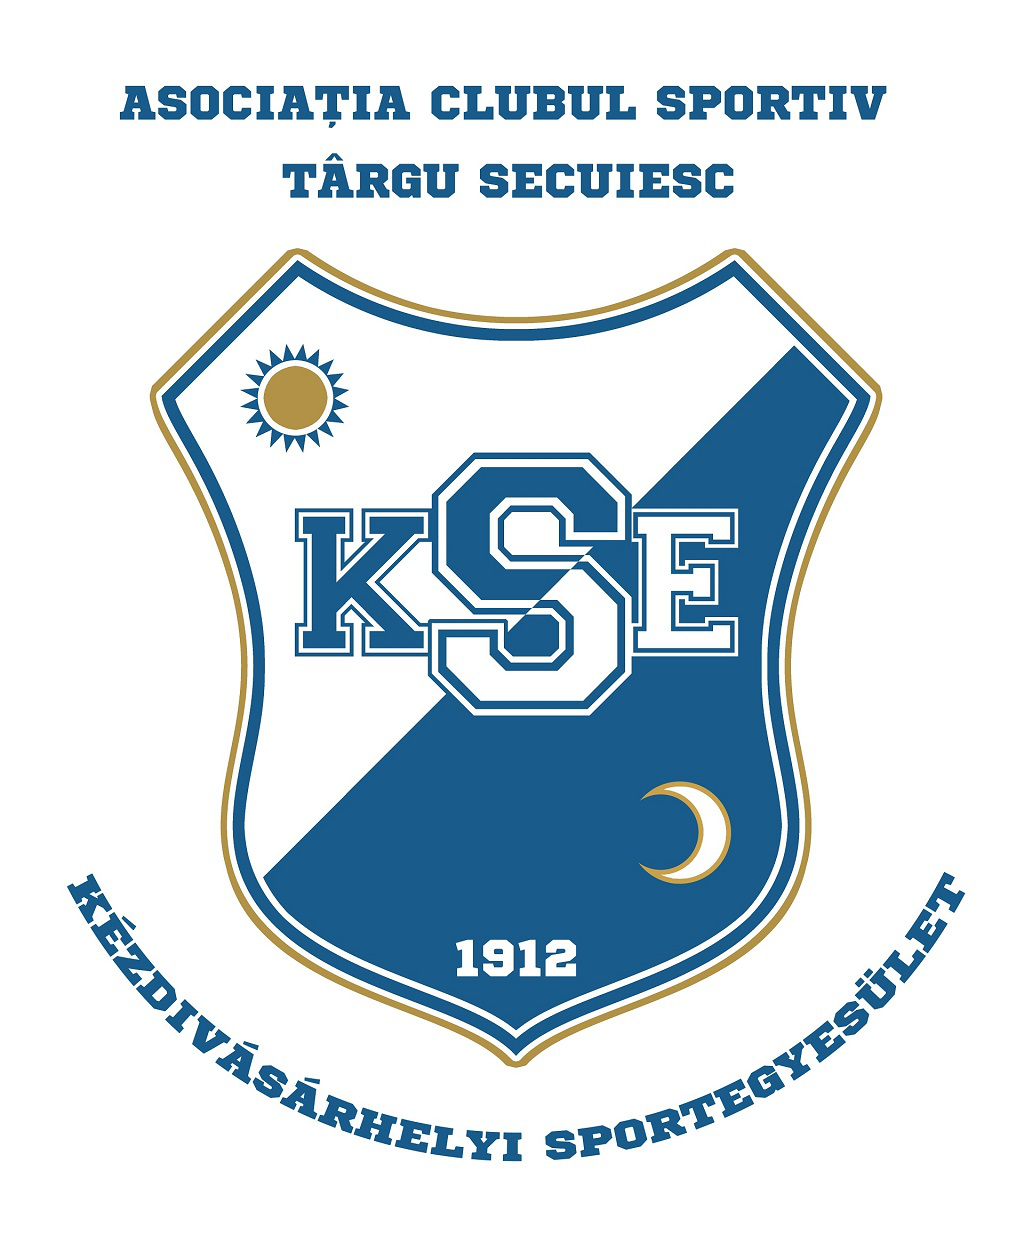 Targu Secuiesc team logo